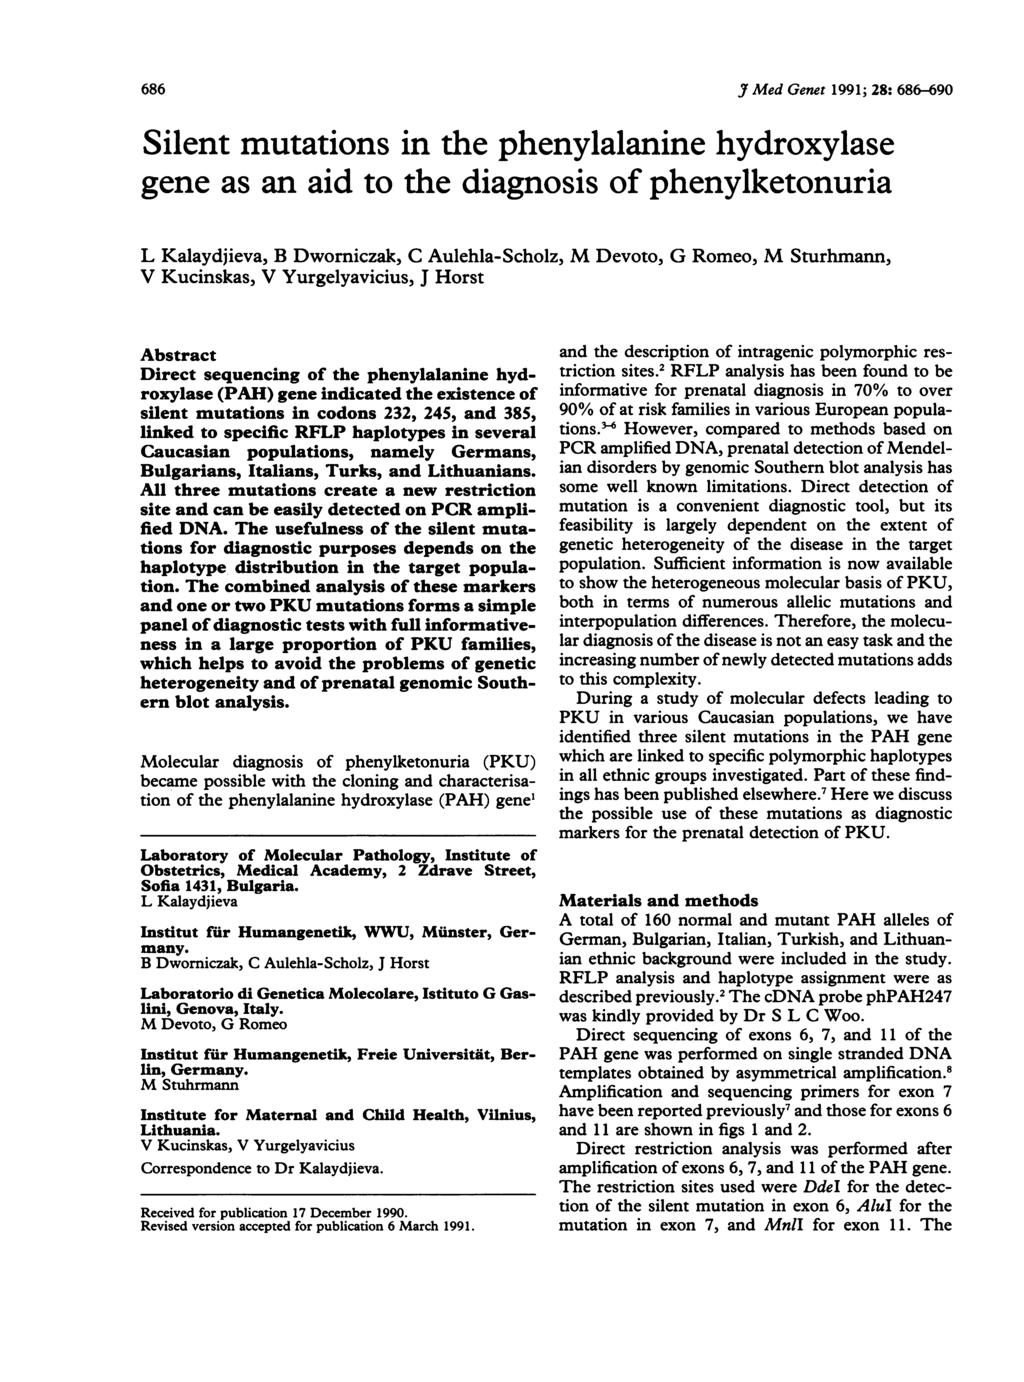 6866 Med Genet 1991; 28: 686-690 Silent mutations in the phenylalanine hydroxylase gene as an aid to the diagnosis of phenylketonuria L Kalaydjieva, B Dworniczak, C Aulehla-Scholz,M Devoto, G Romeo,